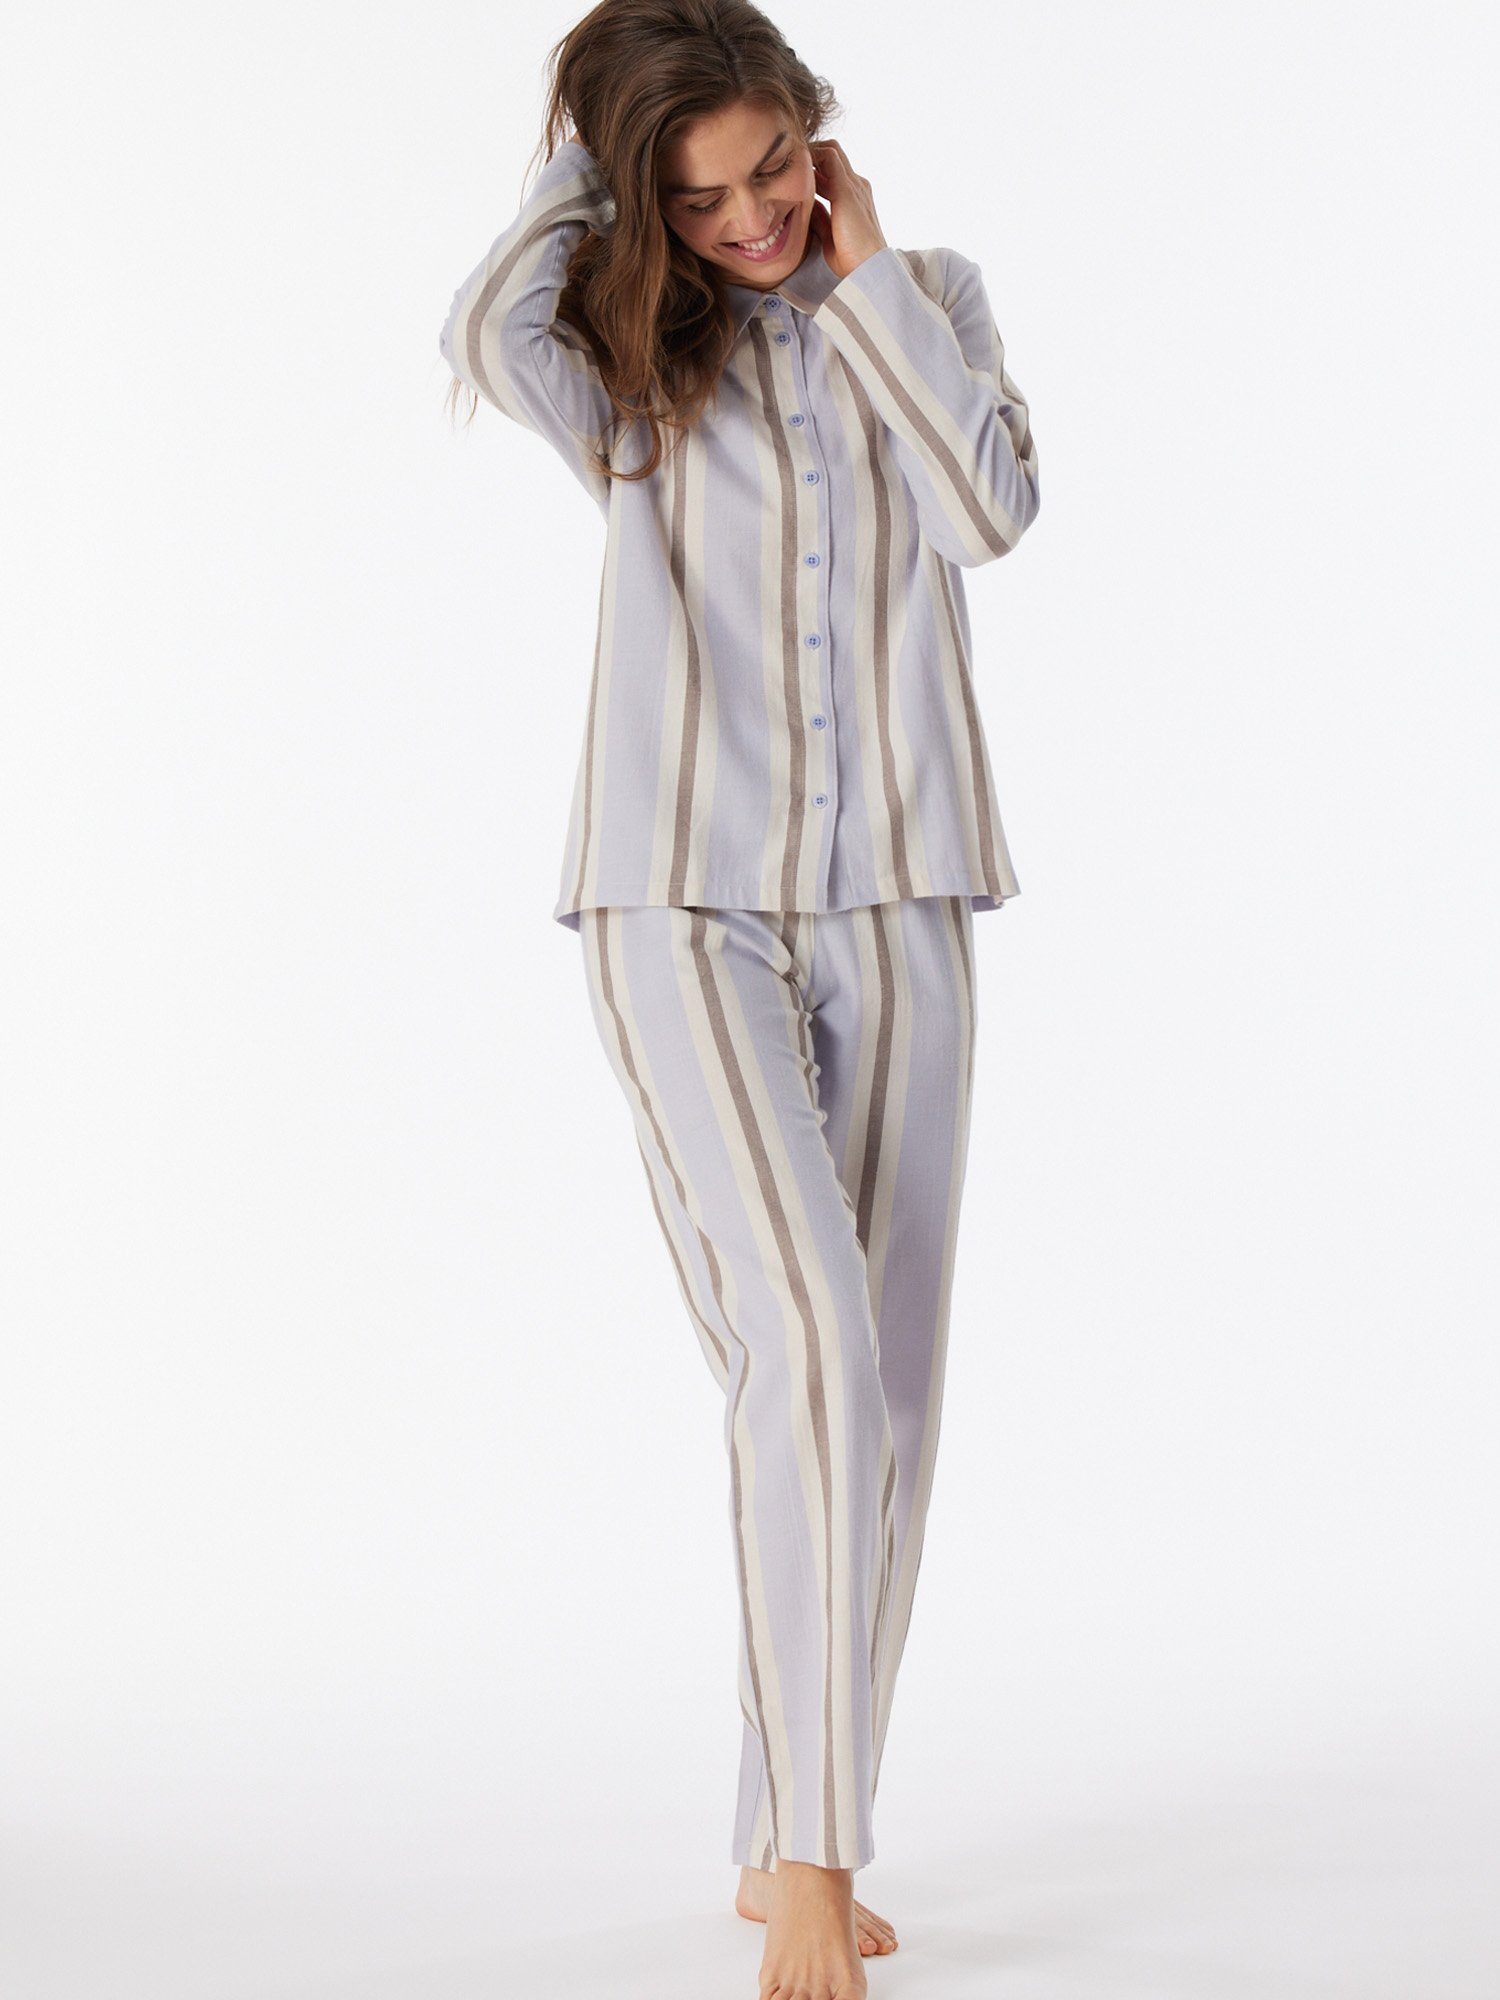 pyjama schlafmode Premium flieder Selected Schiesser schlafanzug Pyjama